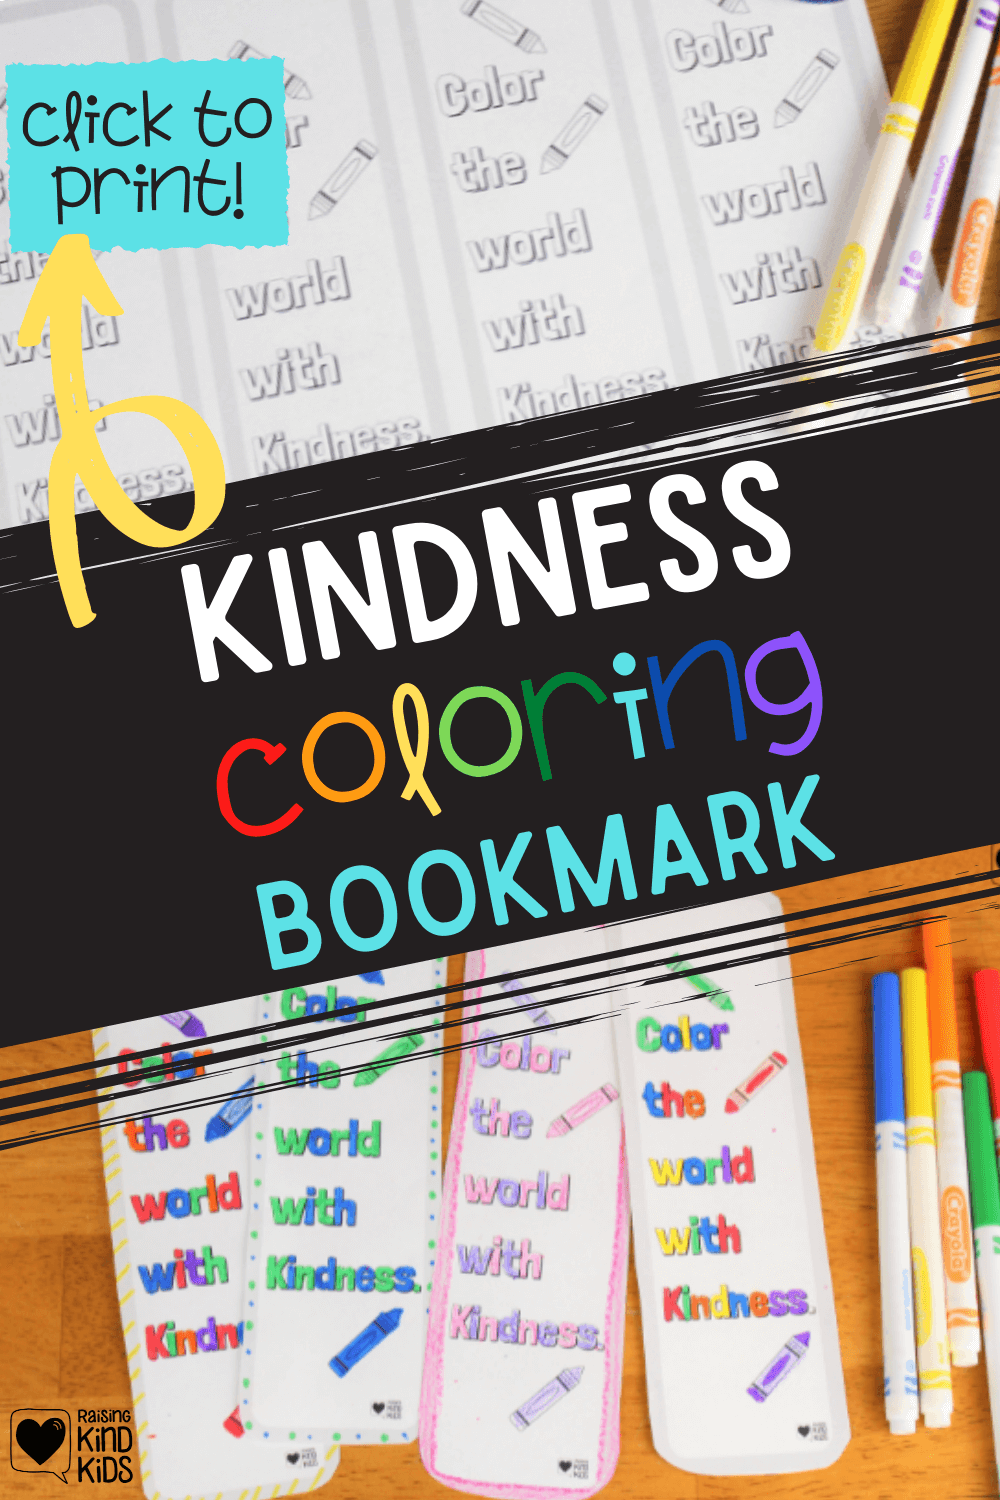 color kindness bookmark freebie 2